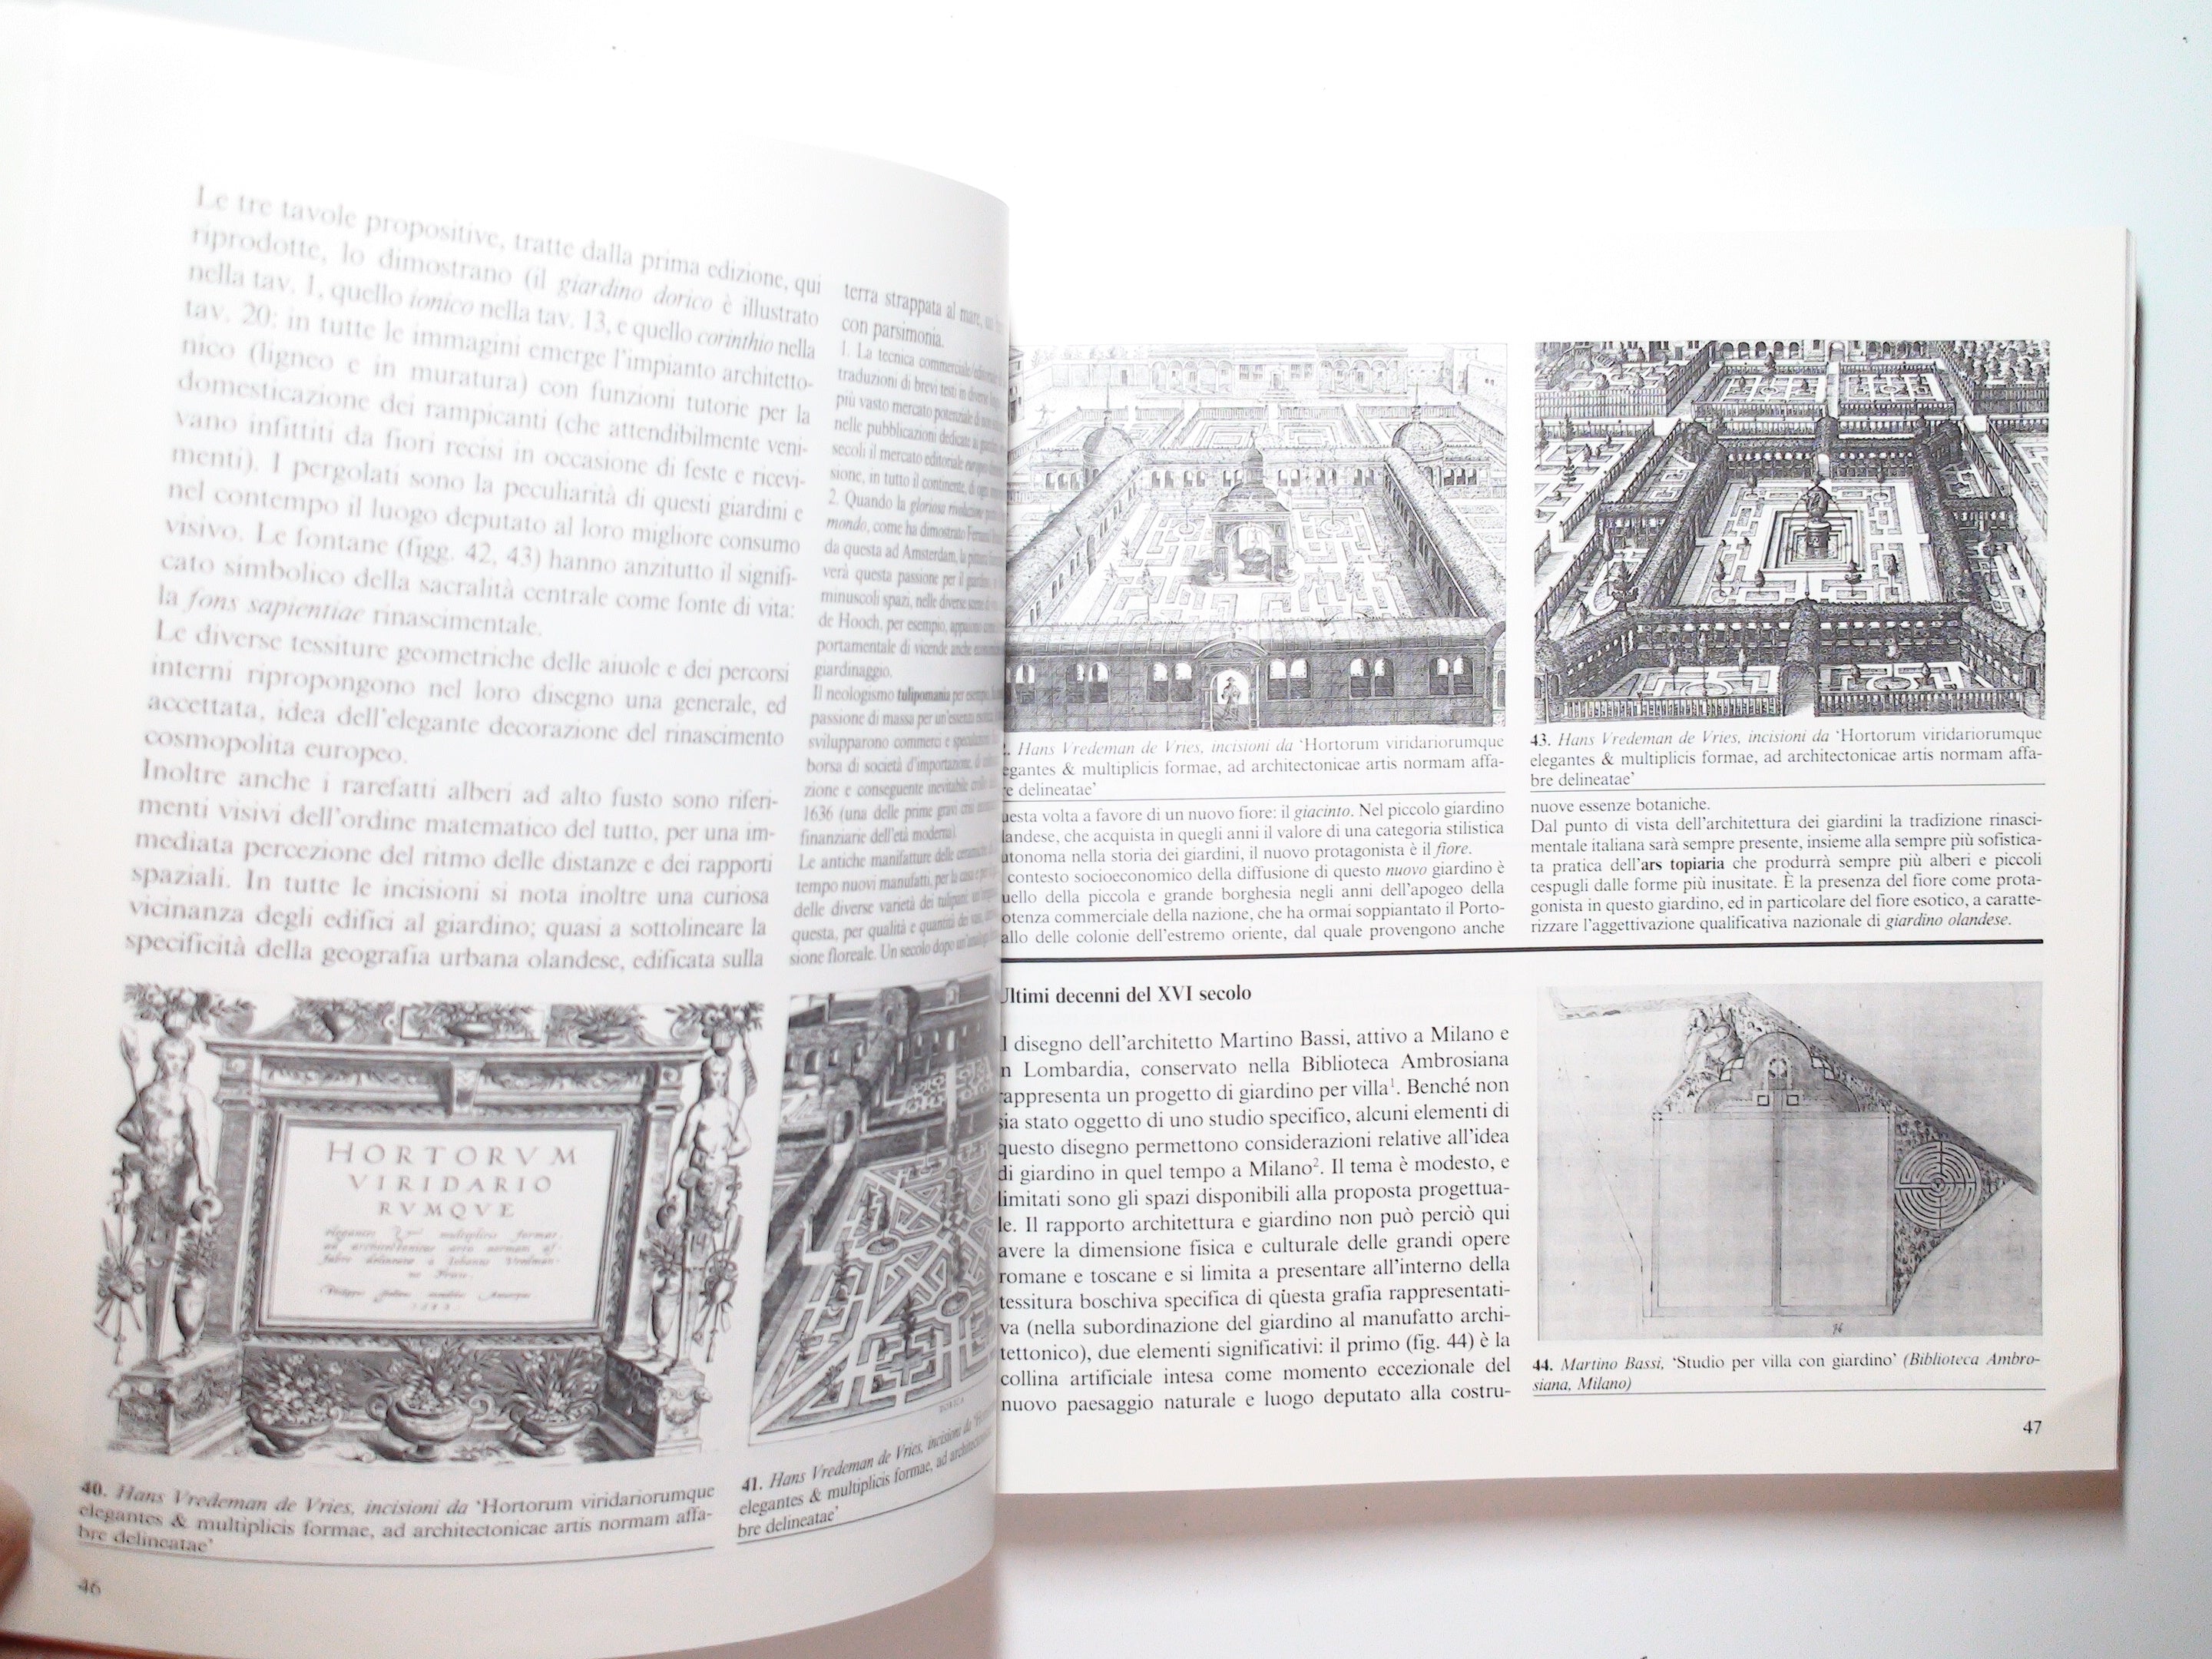 Il Giardino a Milano, Virgilio Vercelloni, Illustrated, 1st Ed, Italian, 1986